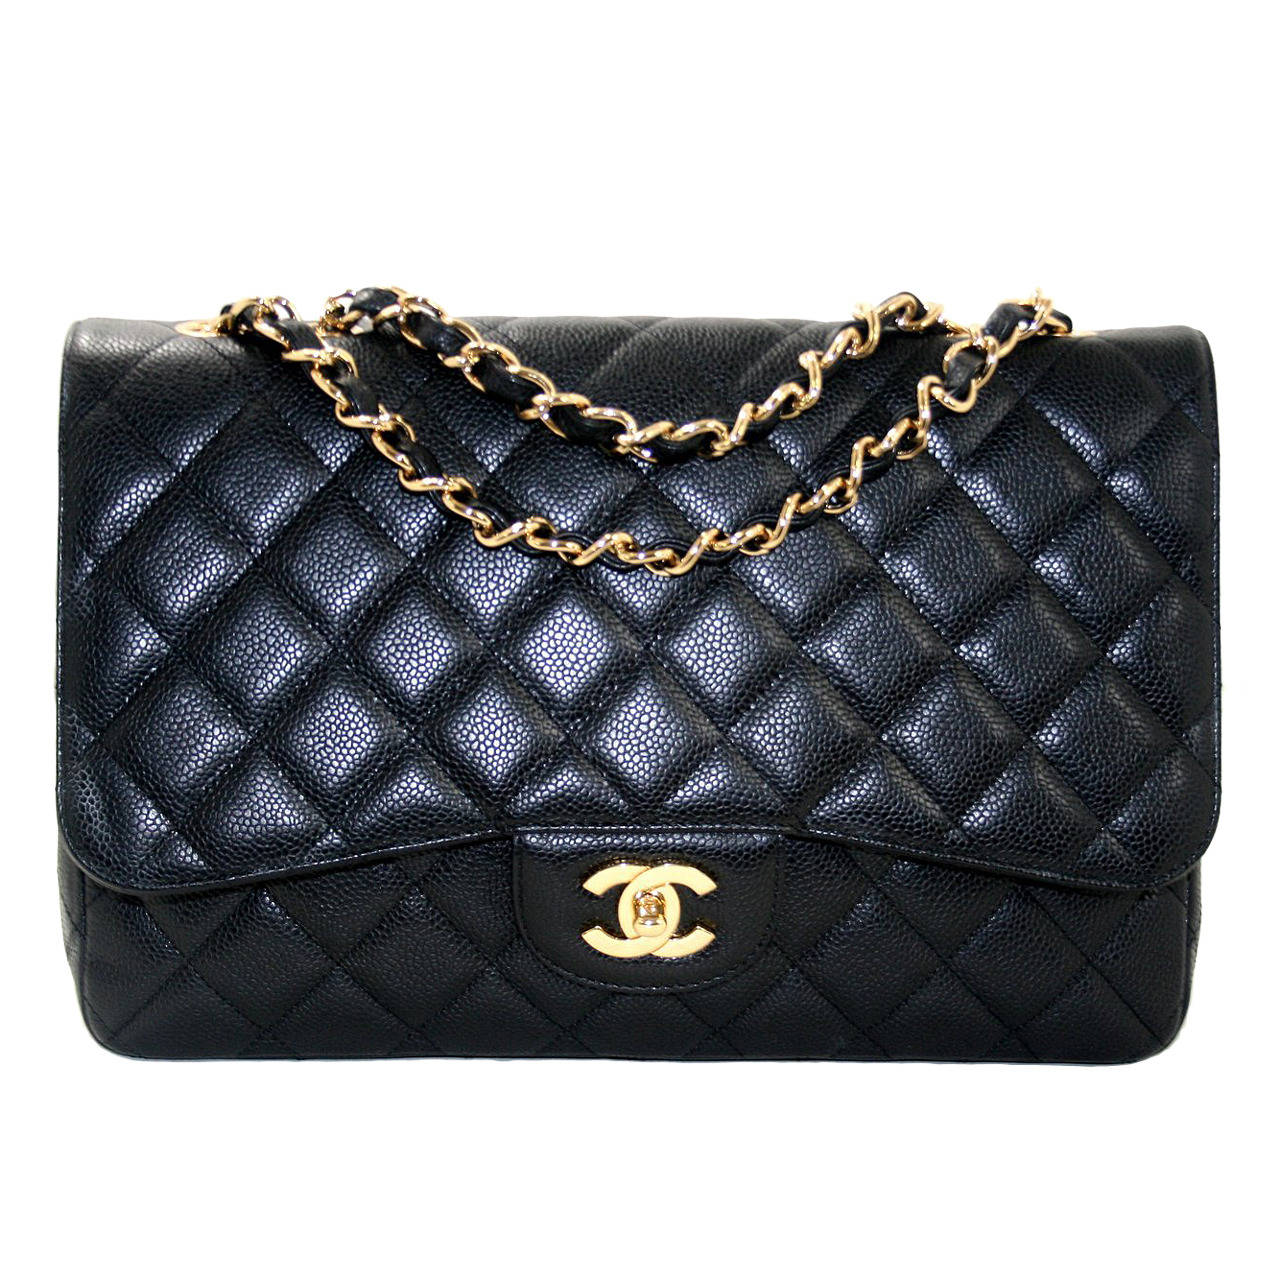 Chanel Black Caviar Leather Jumbo Classic Flap Bag GHW